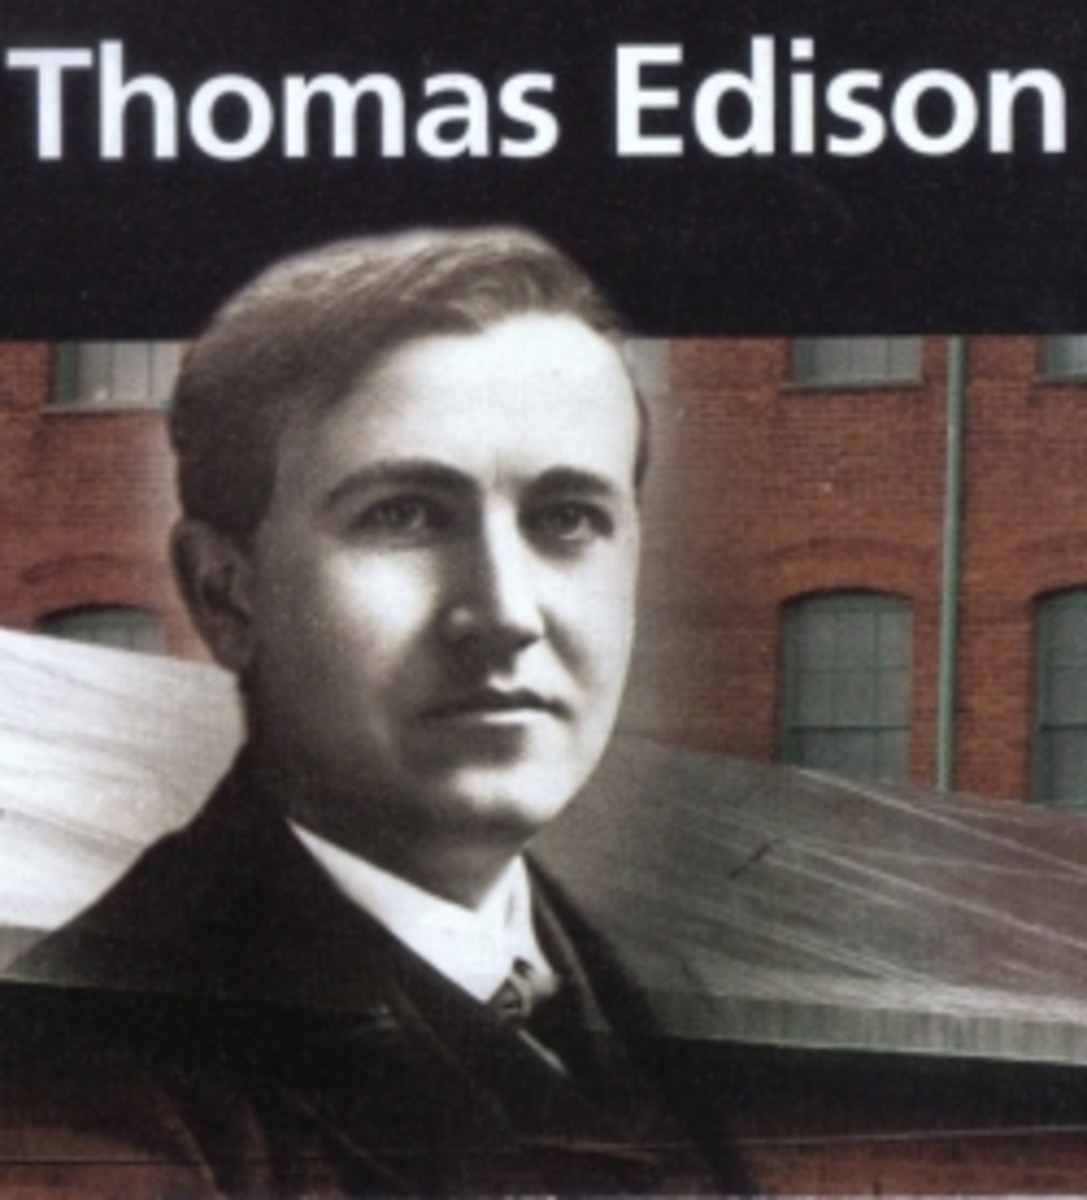 Thomas Edison's Laboratory: A New Jersey Family Day Trip!